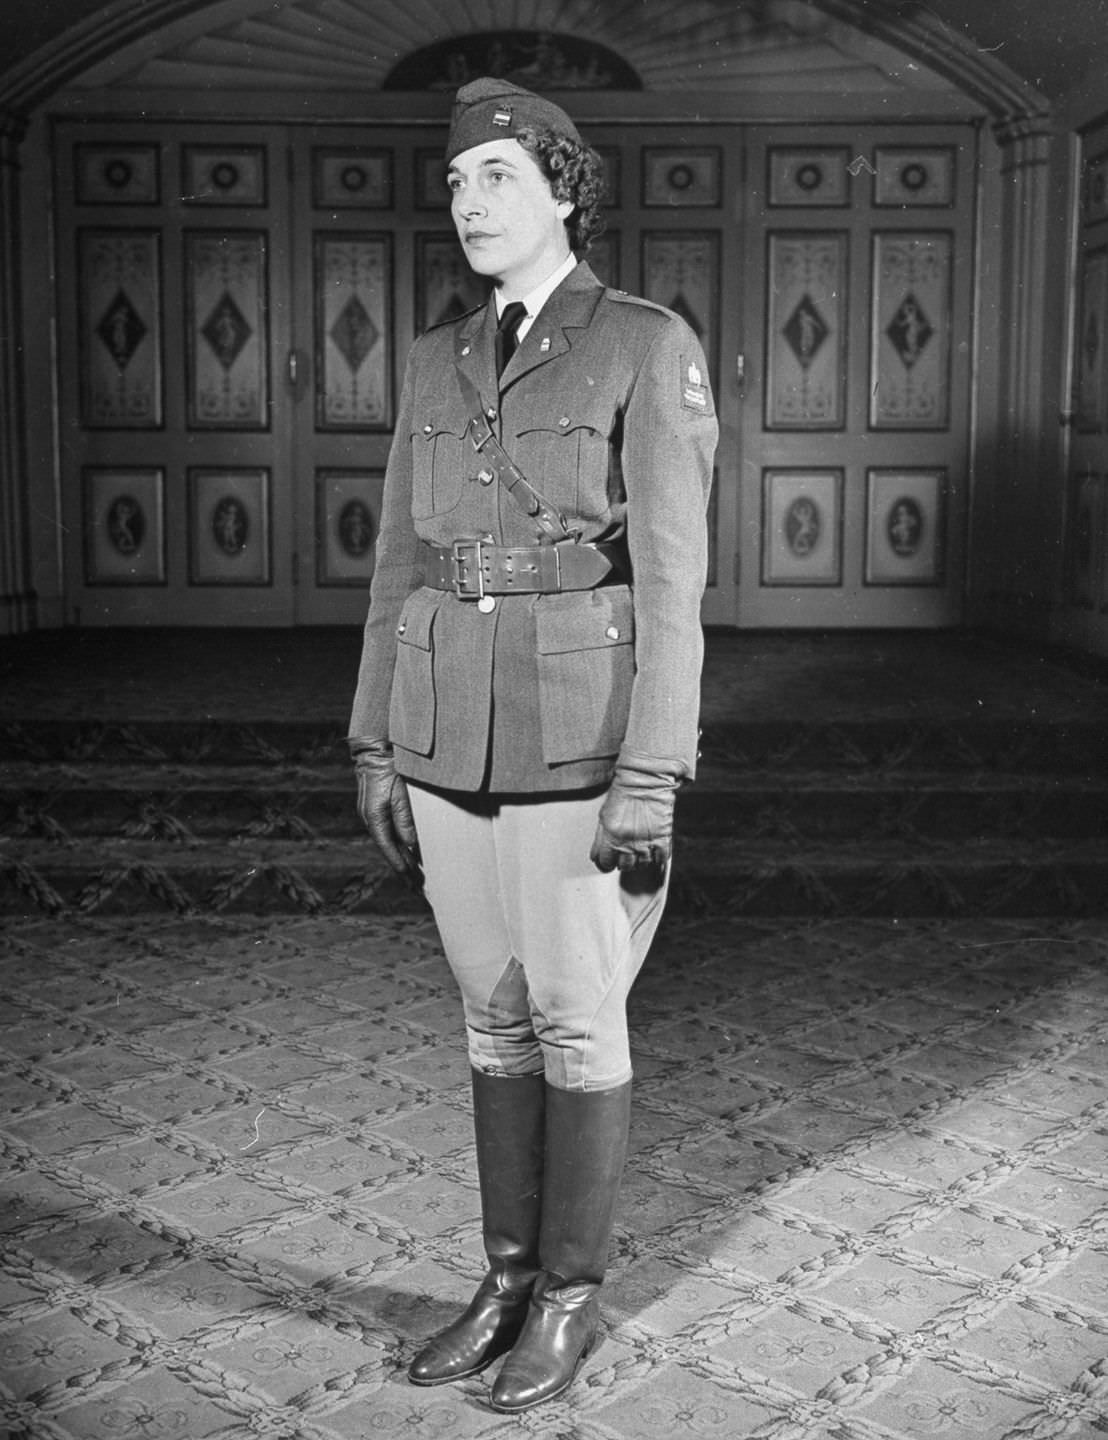 WWII Women's Uniform: What The Servicewomen Wore During The World War II